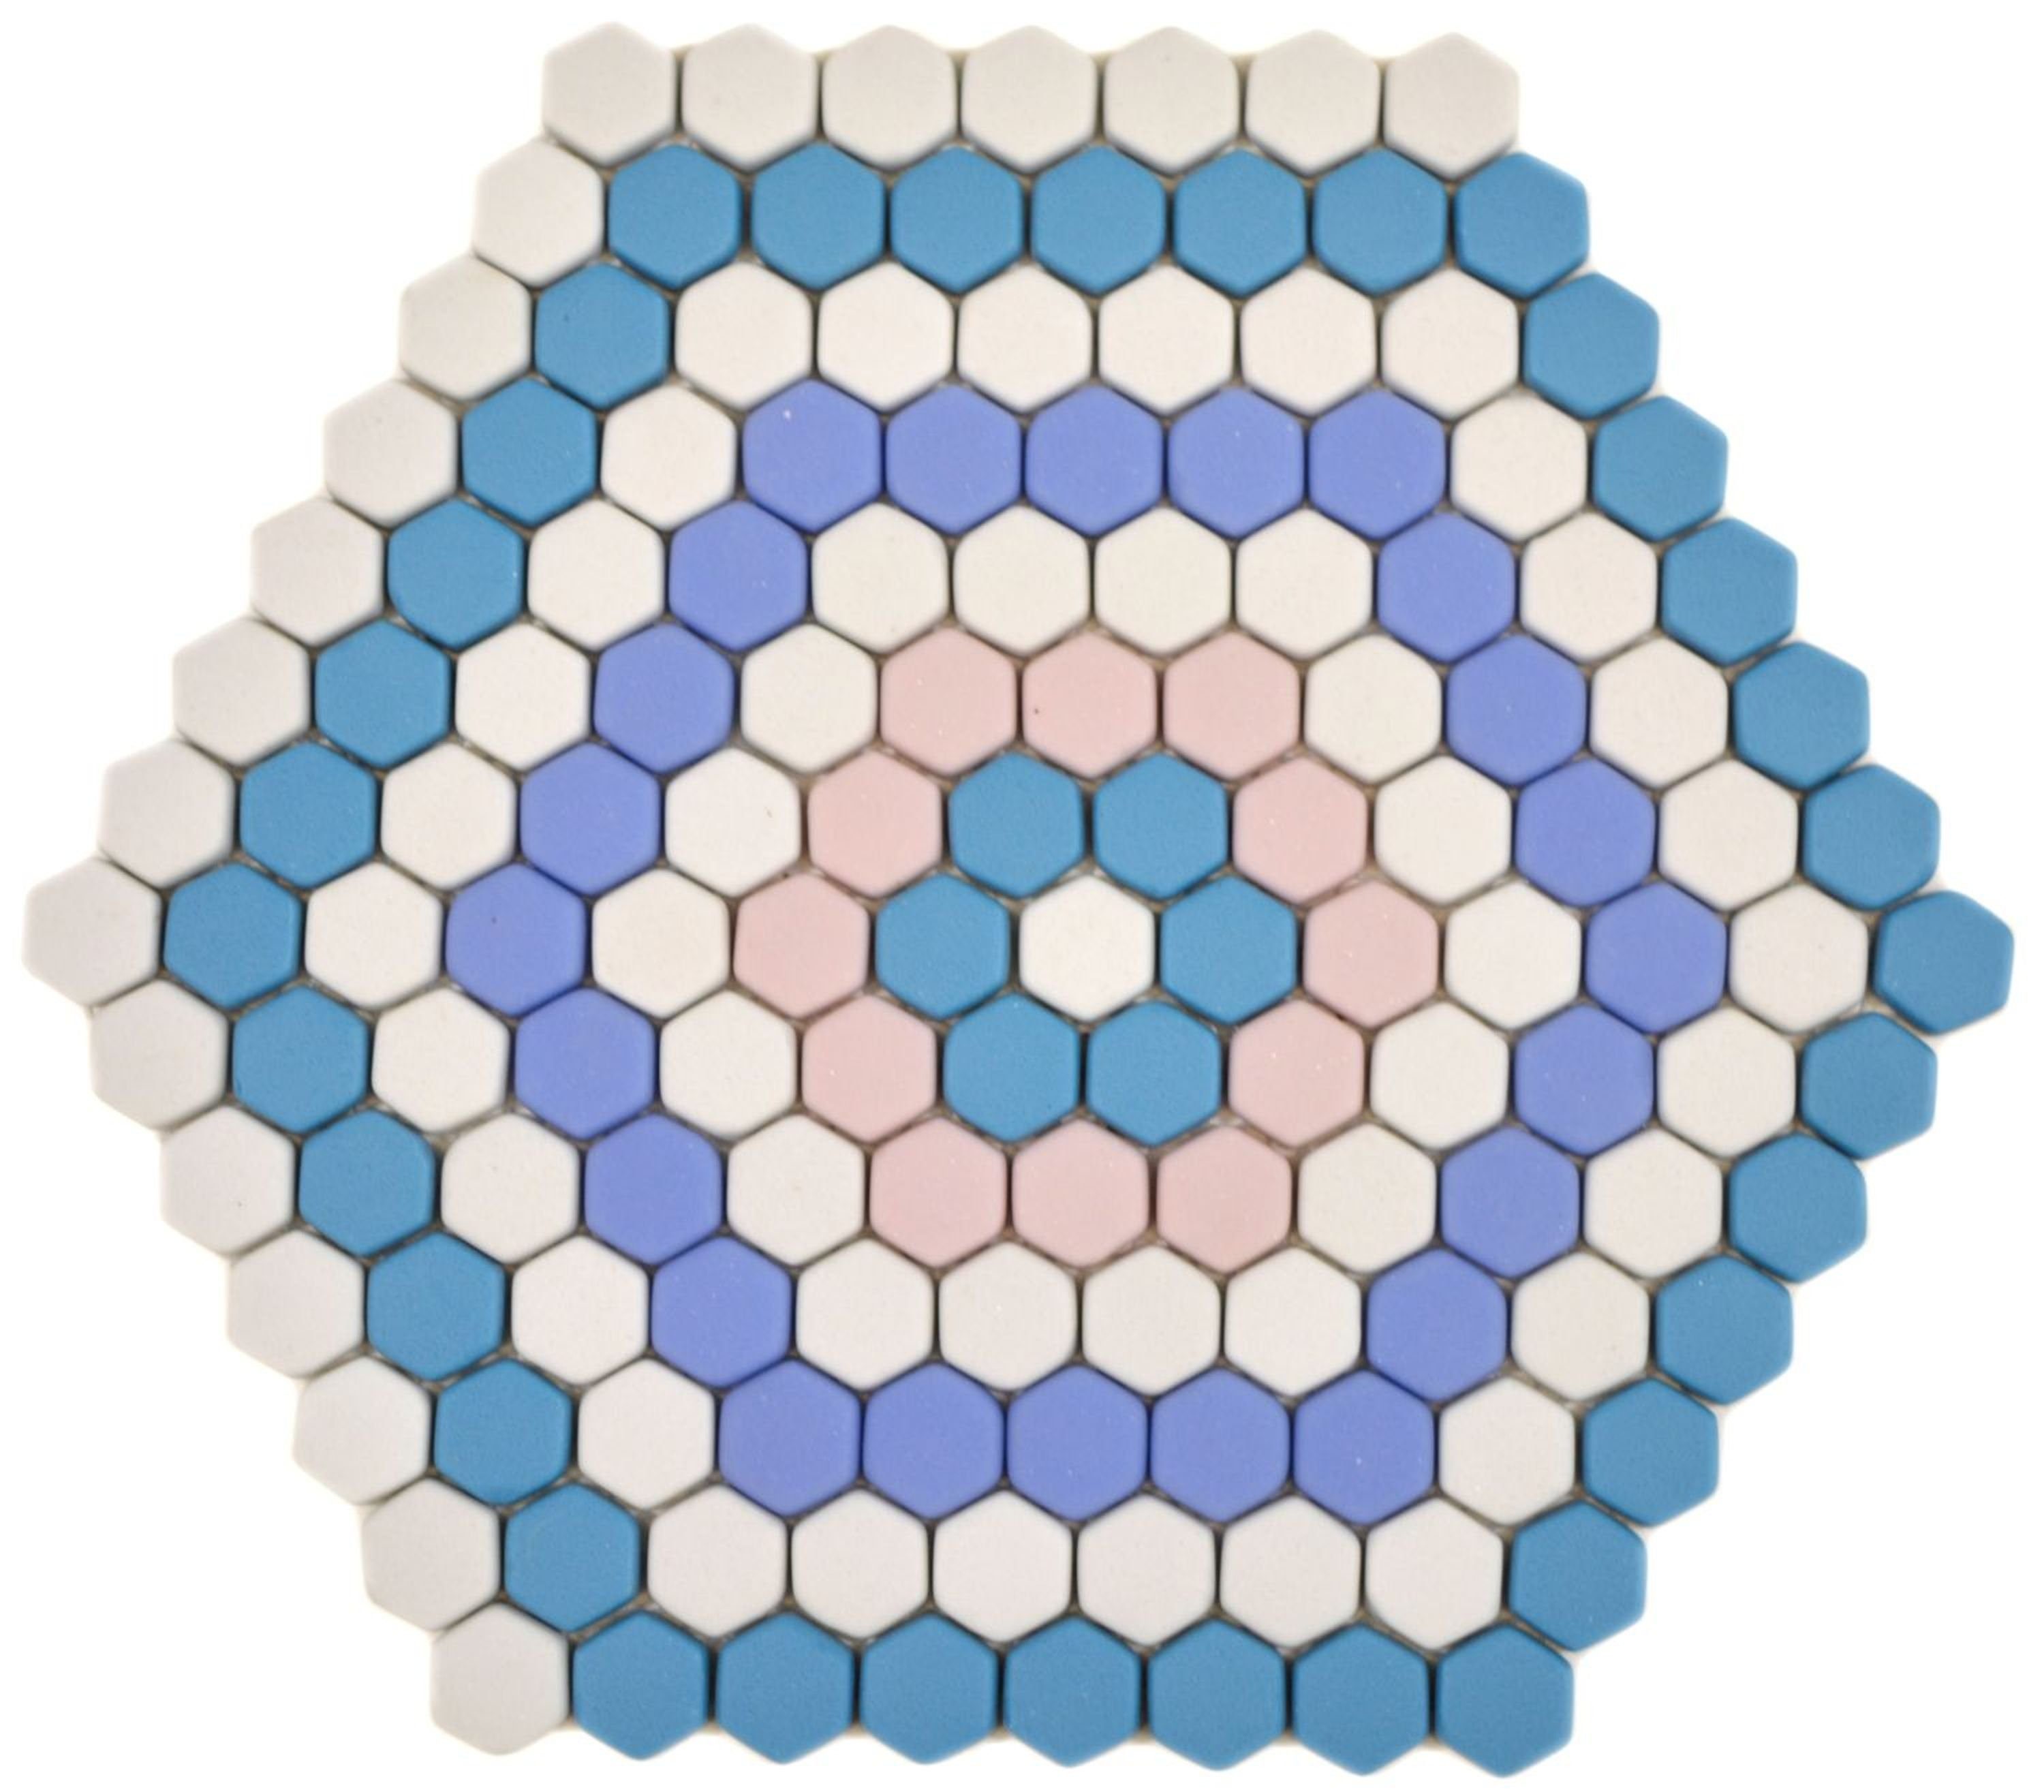 Mosani Mosaikfliesen Glasmosaik Hexagon DEKOR blau rosa weiss matt